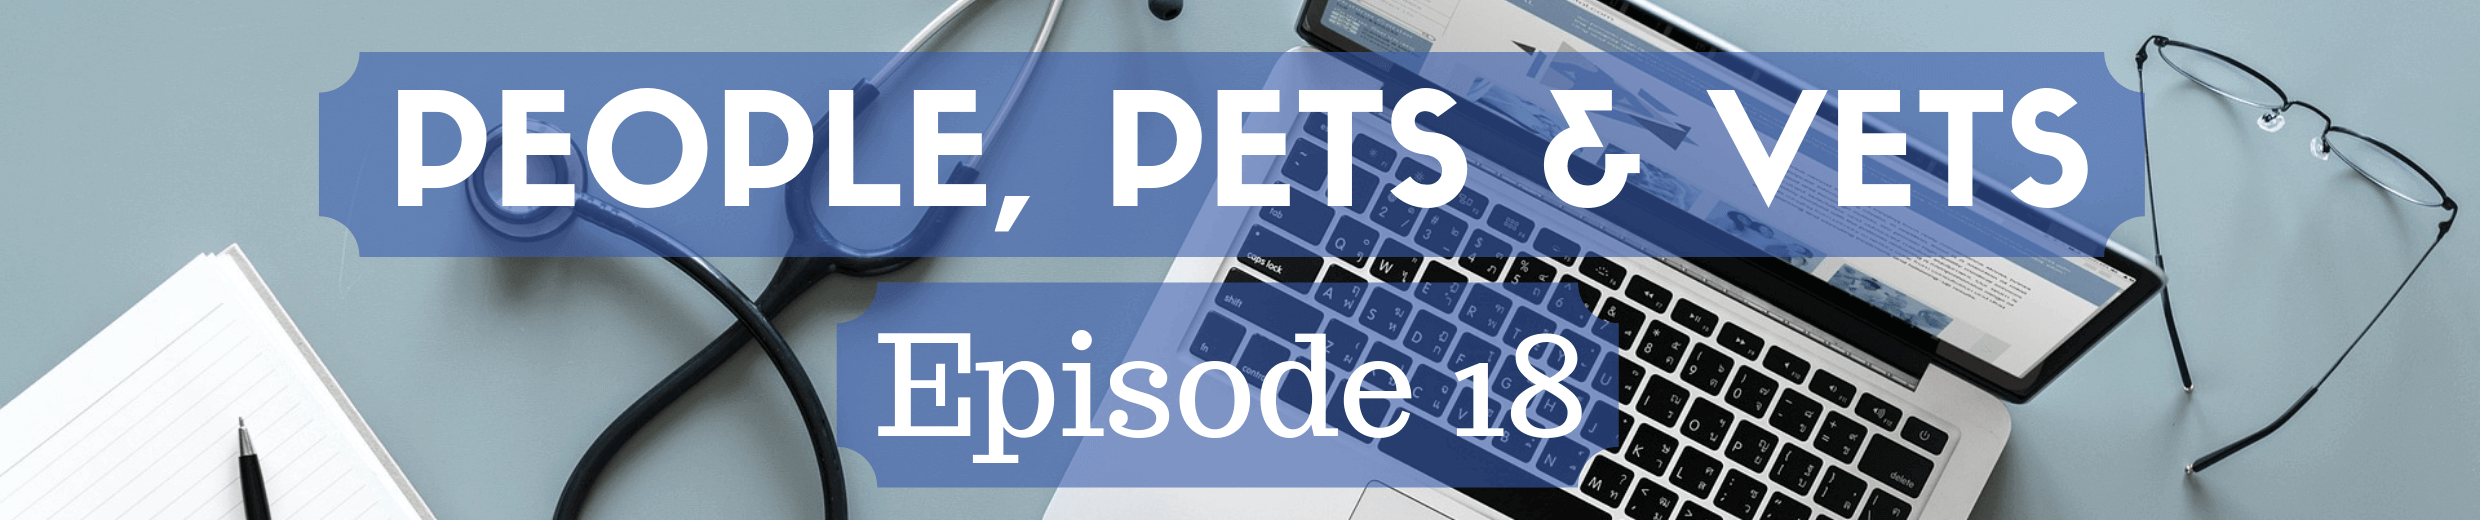 People, Pets & Vets: Episode 18